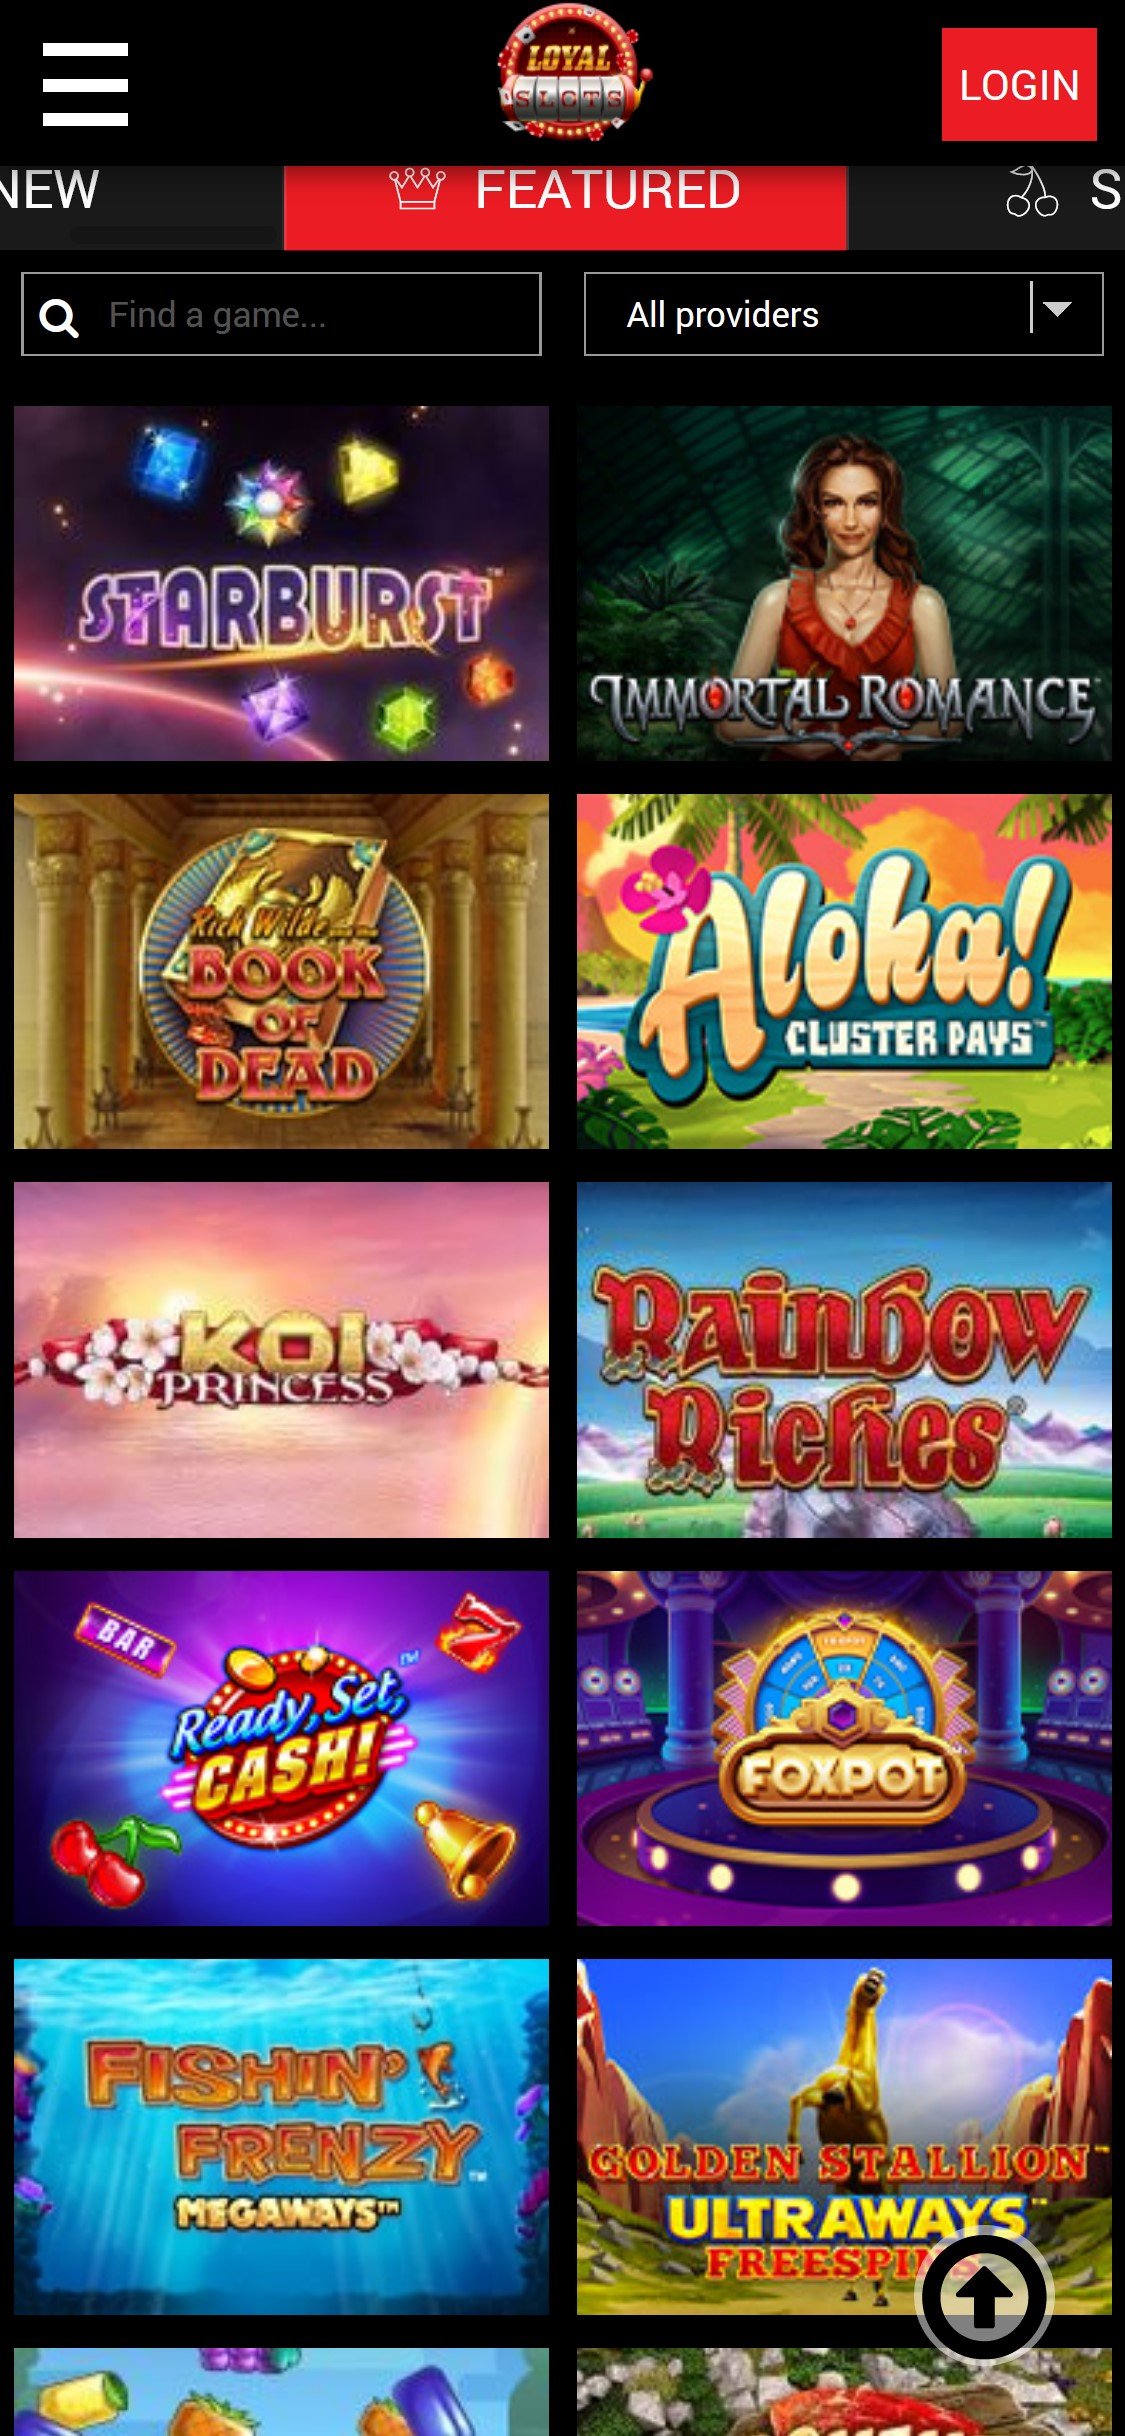 Loyal Slots Casino Mobile Games Review